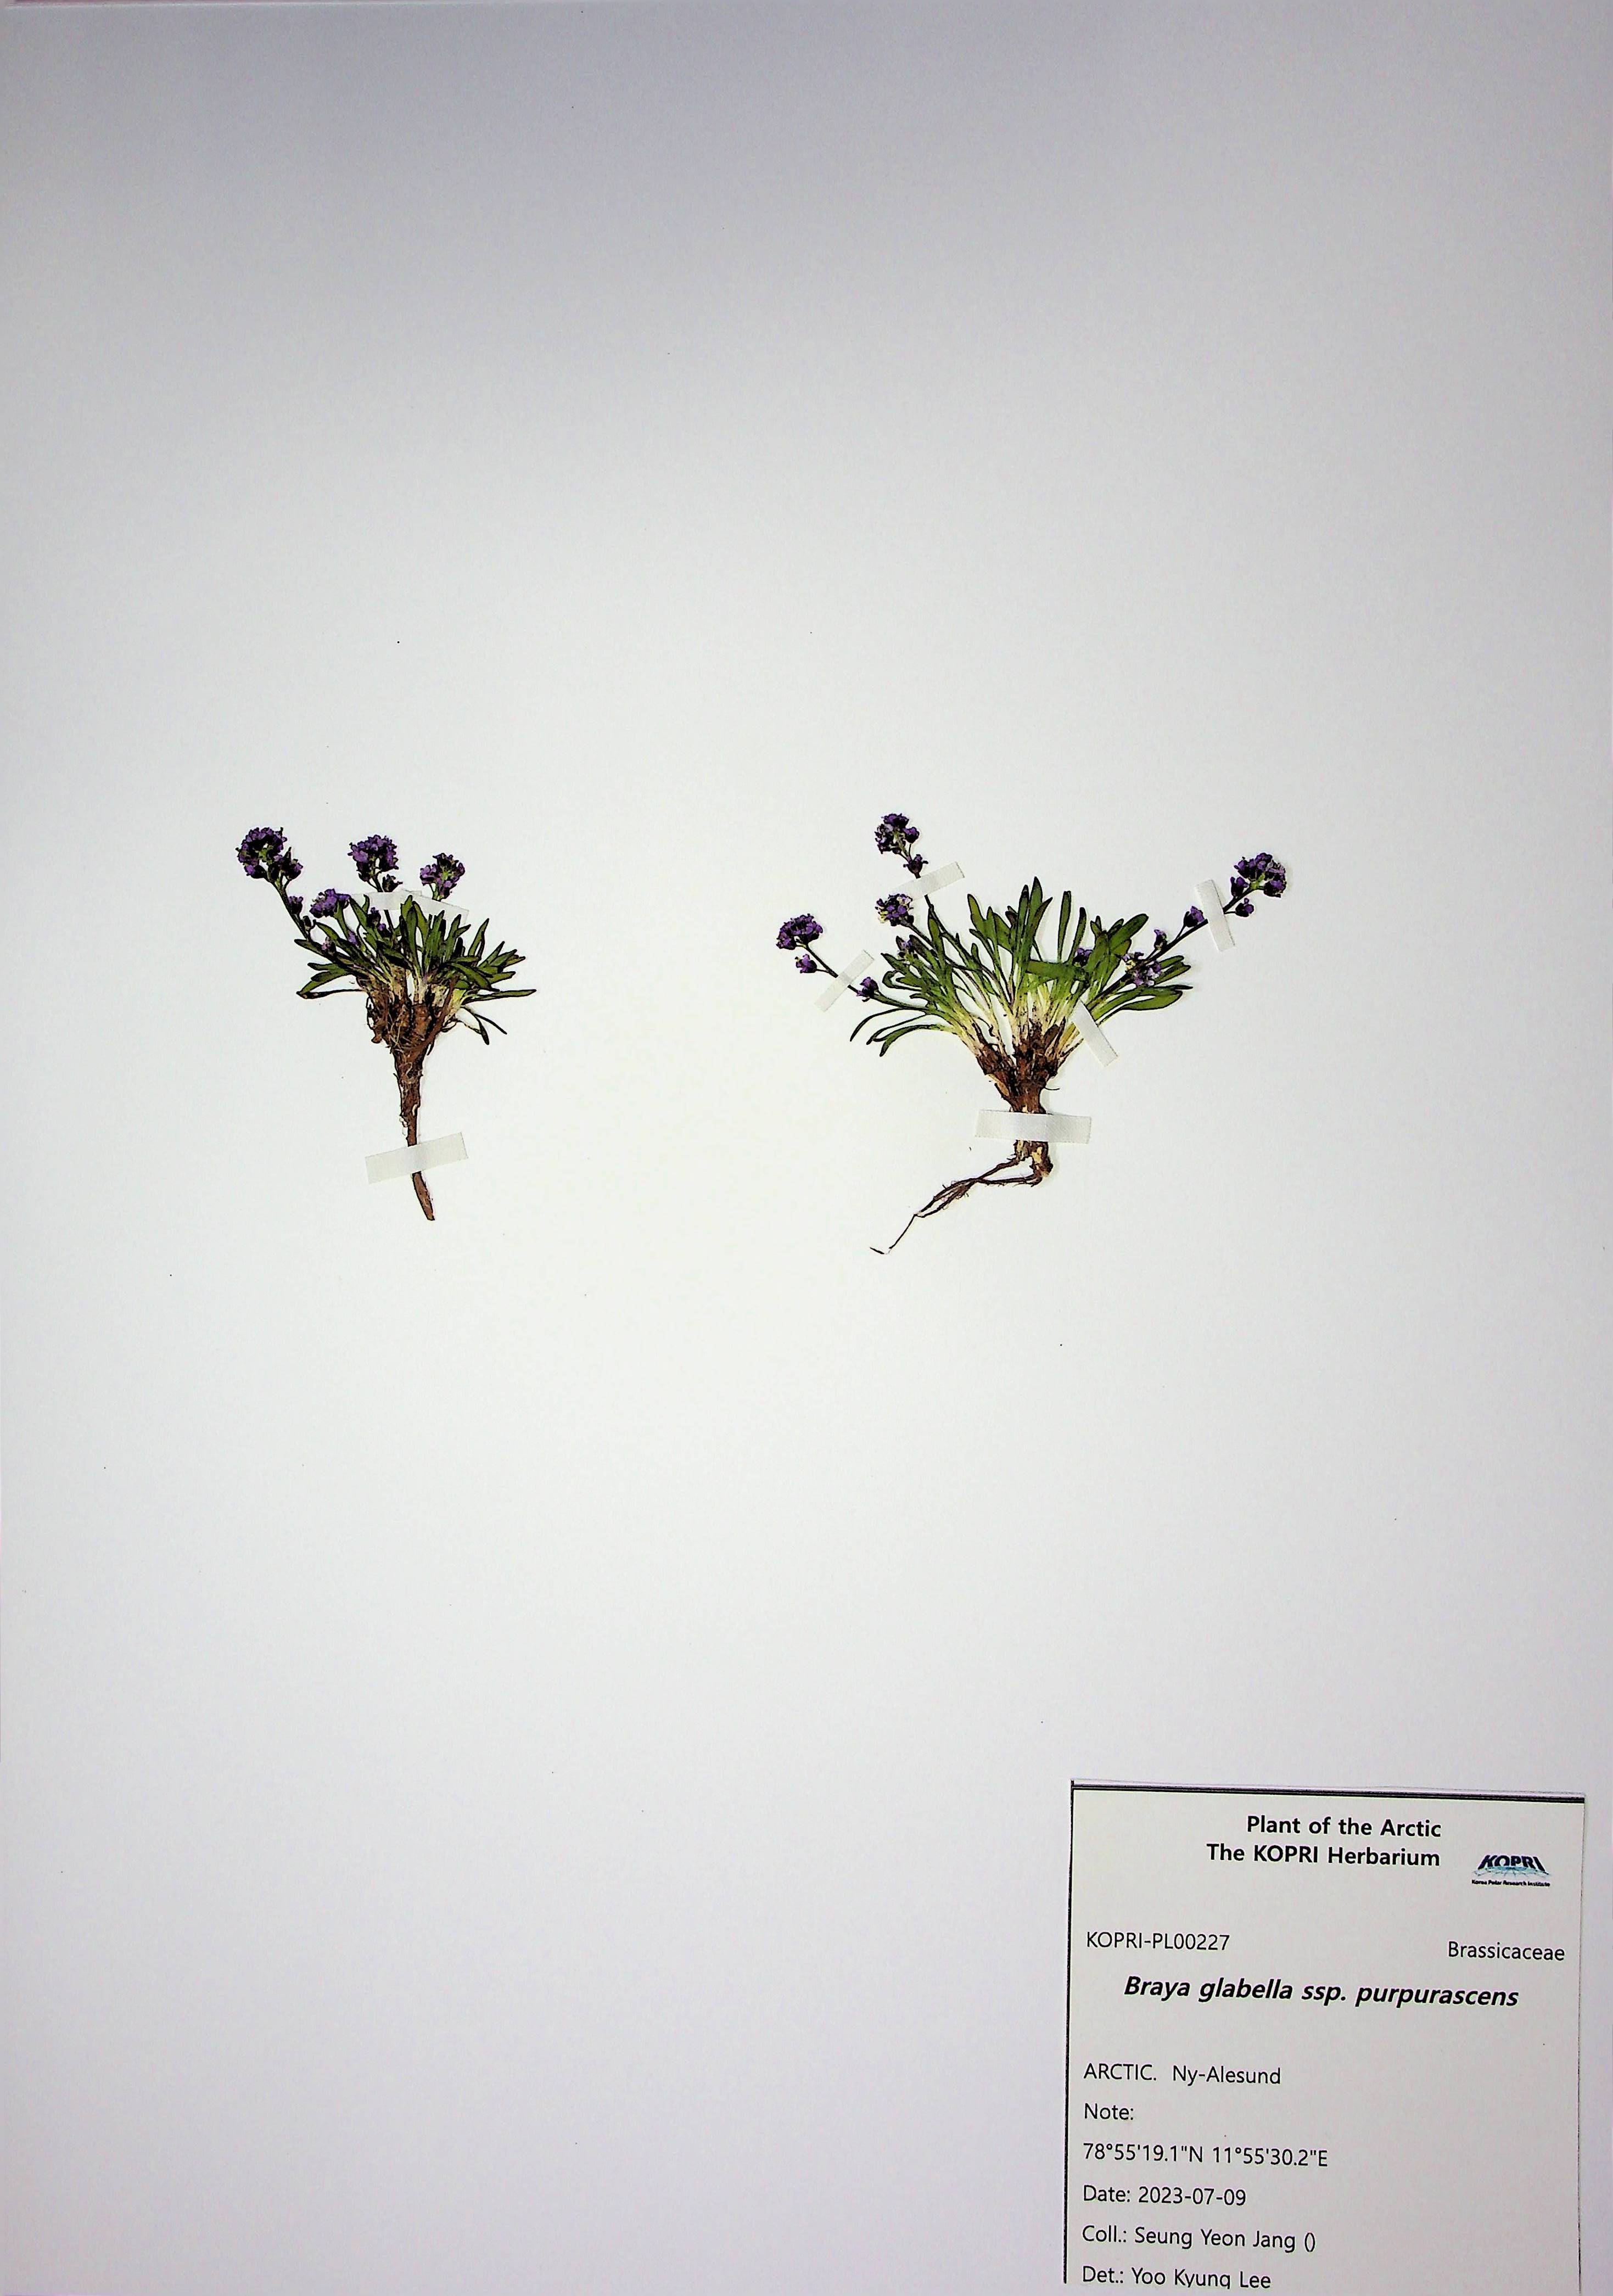 Braya glabella ssp. purpurascens